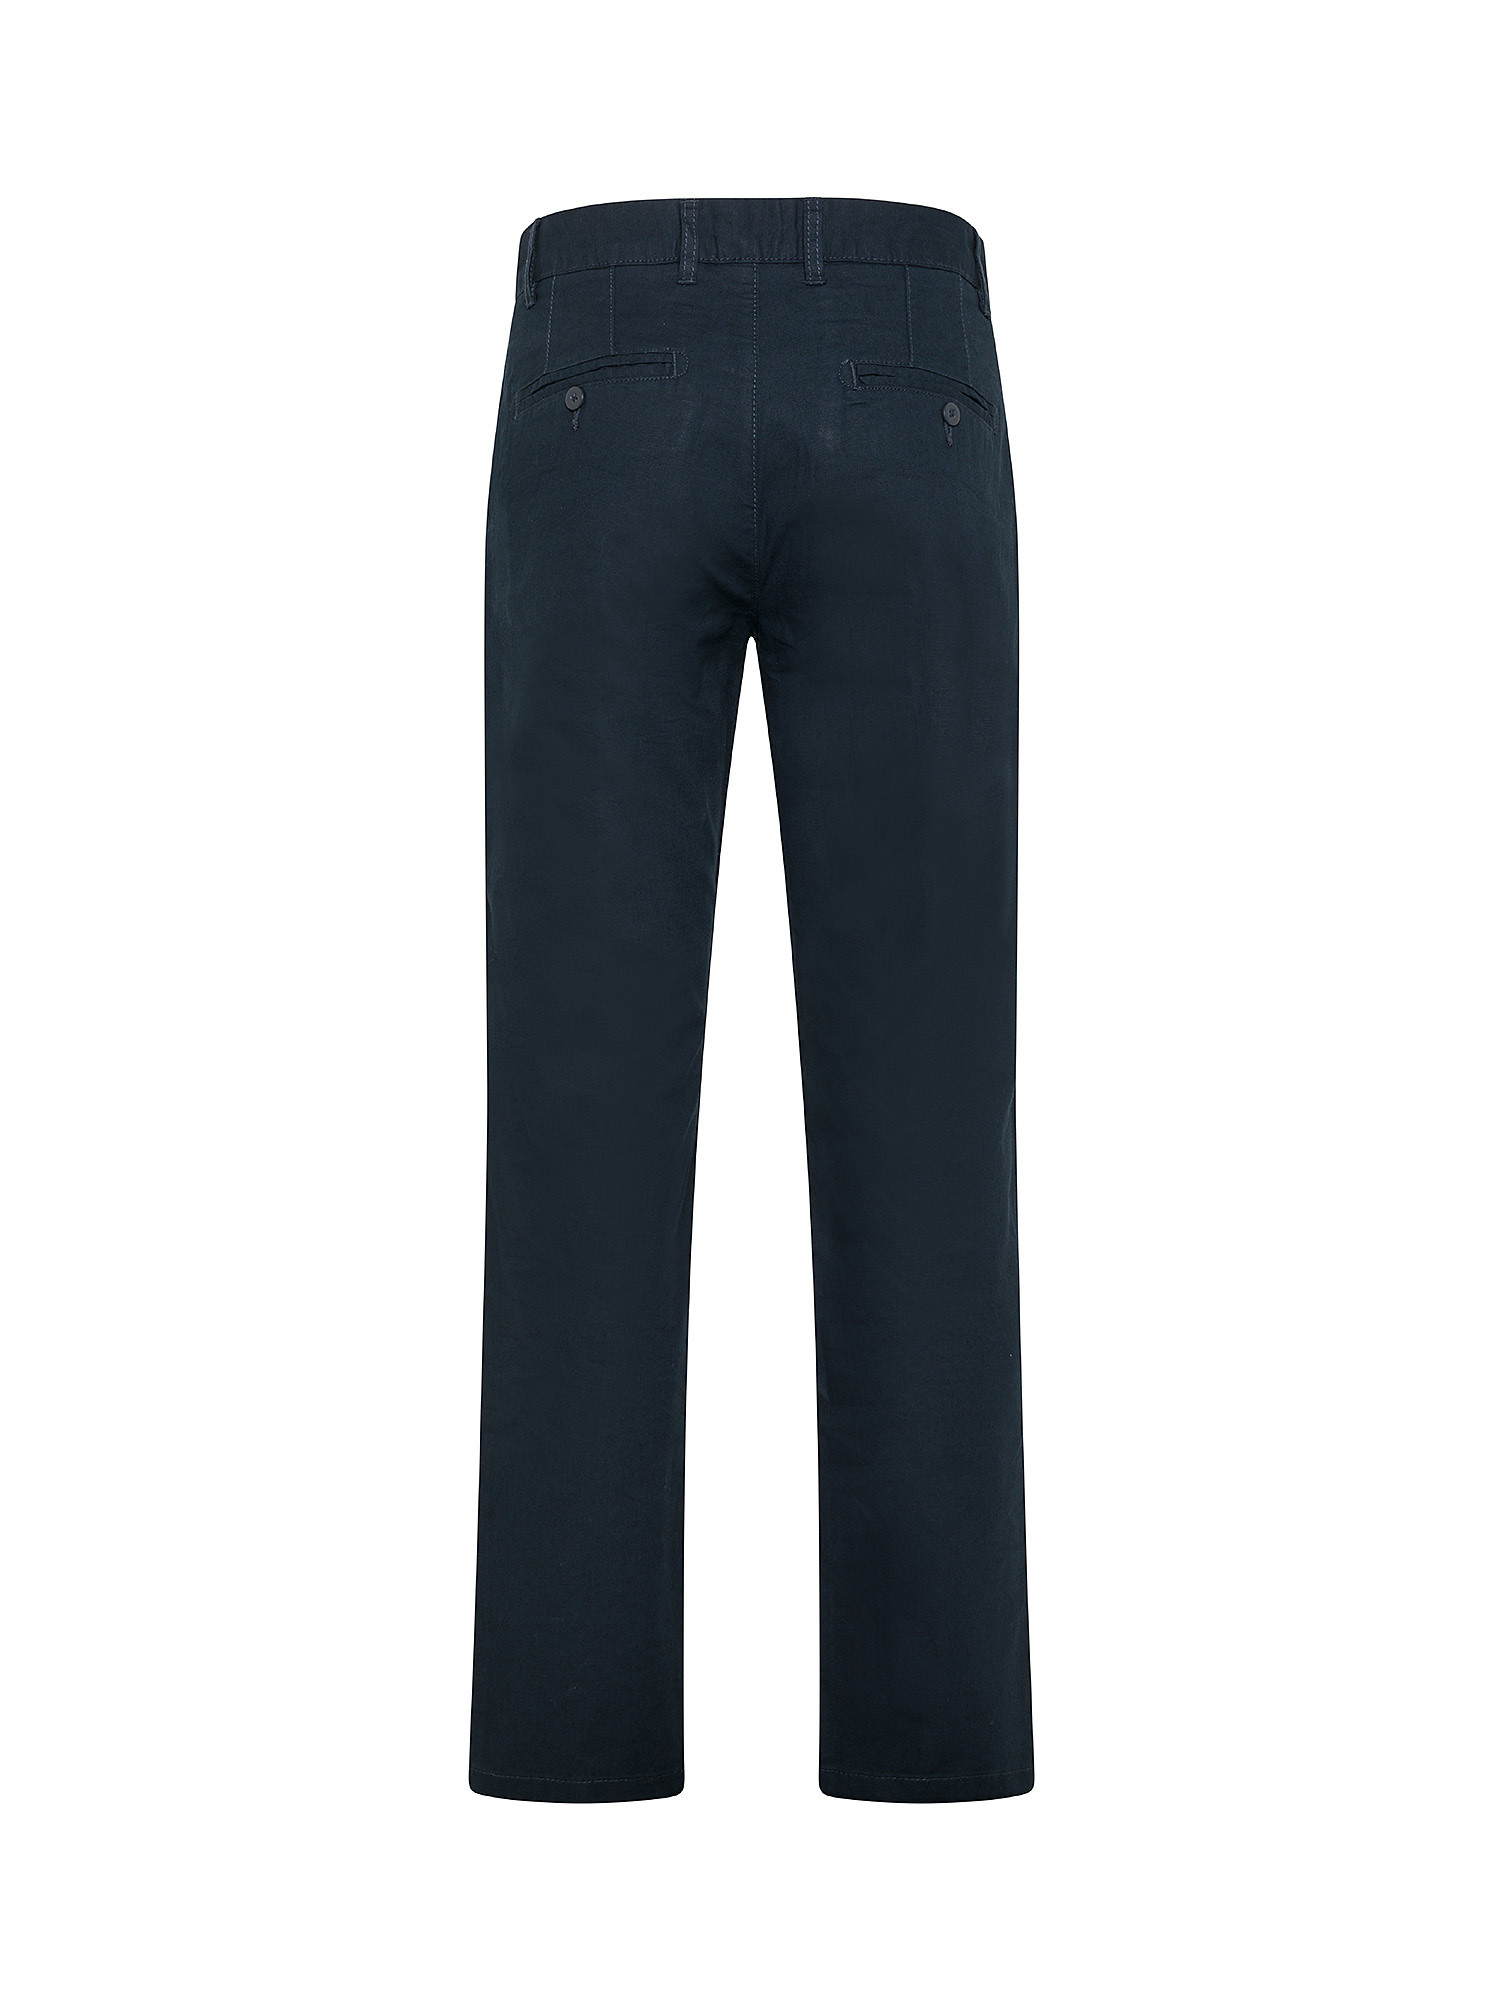 JCT - Pantaloni chino in misto lino, Blu scuro, large image number 1